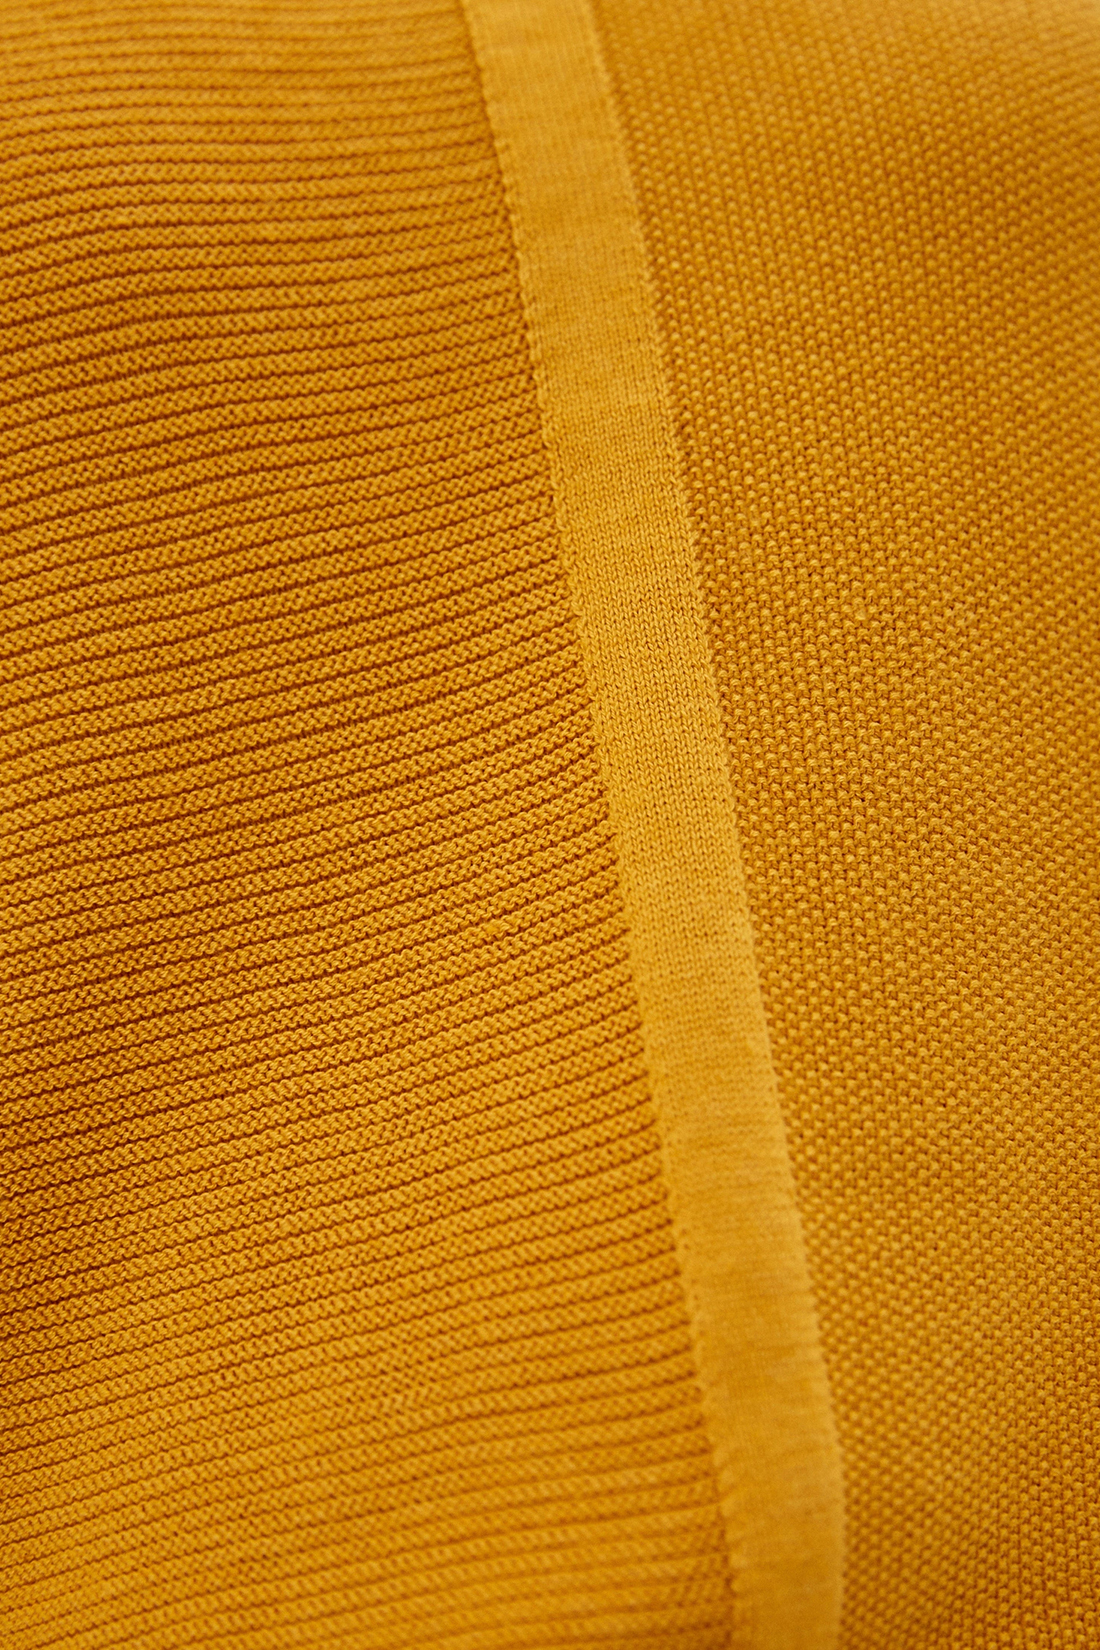 Джемпер (арт. baon B130603), размер XXL, цвет оранжевый Джемпер (арт. baon B130603) - фото 3